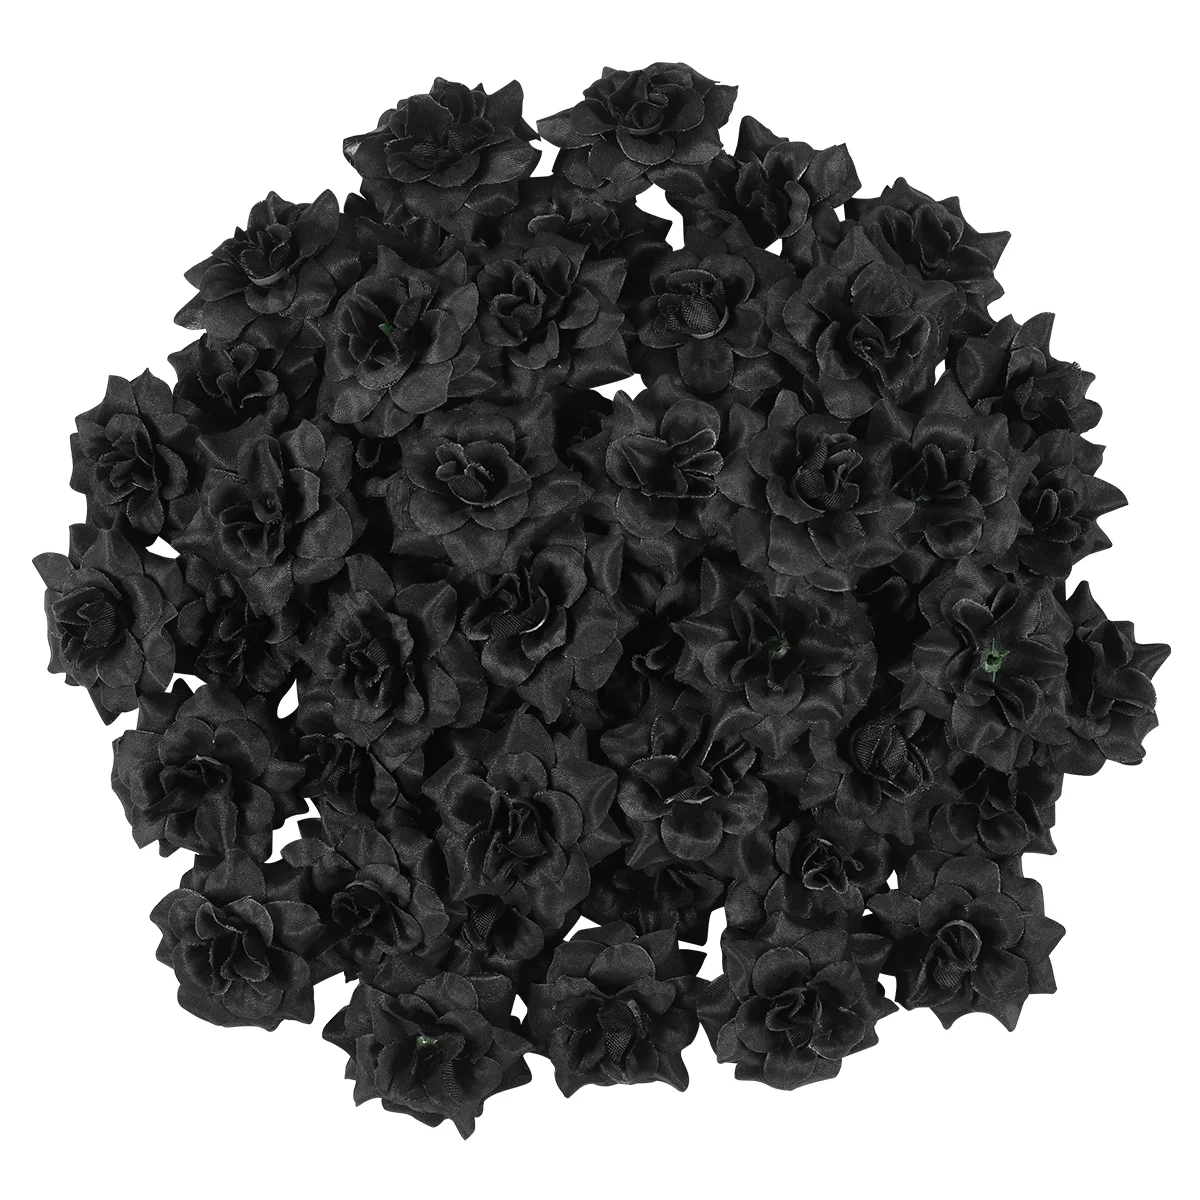 

LUOEM 50pcs Simulation Silk Rose Flower Heads for Hat Clothes Album Embellishment (Black)